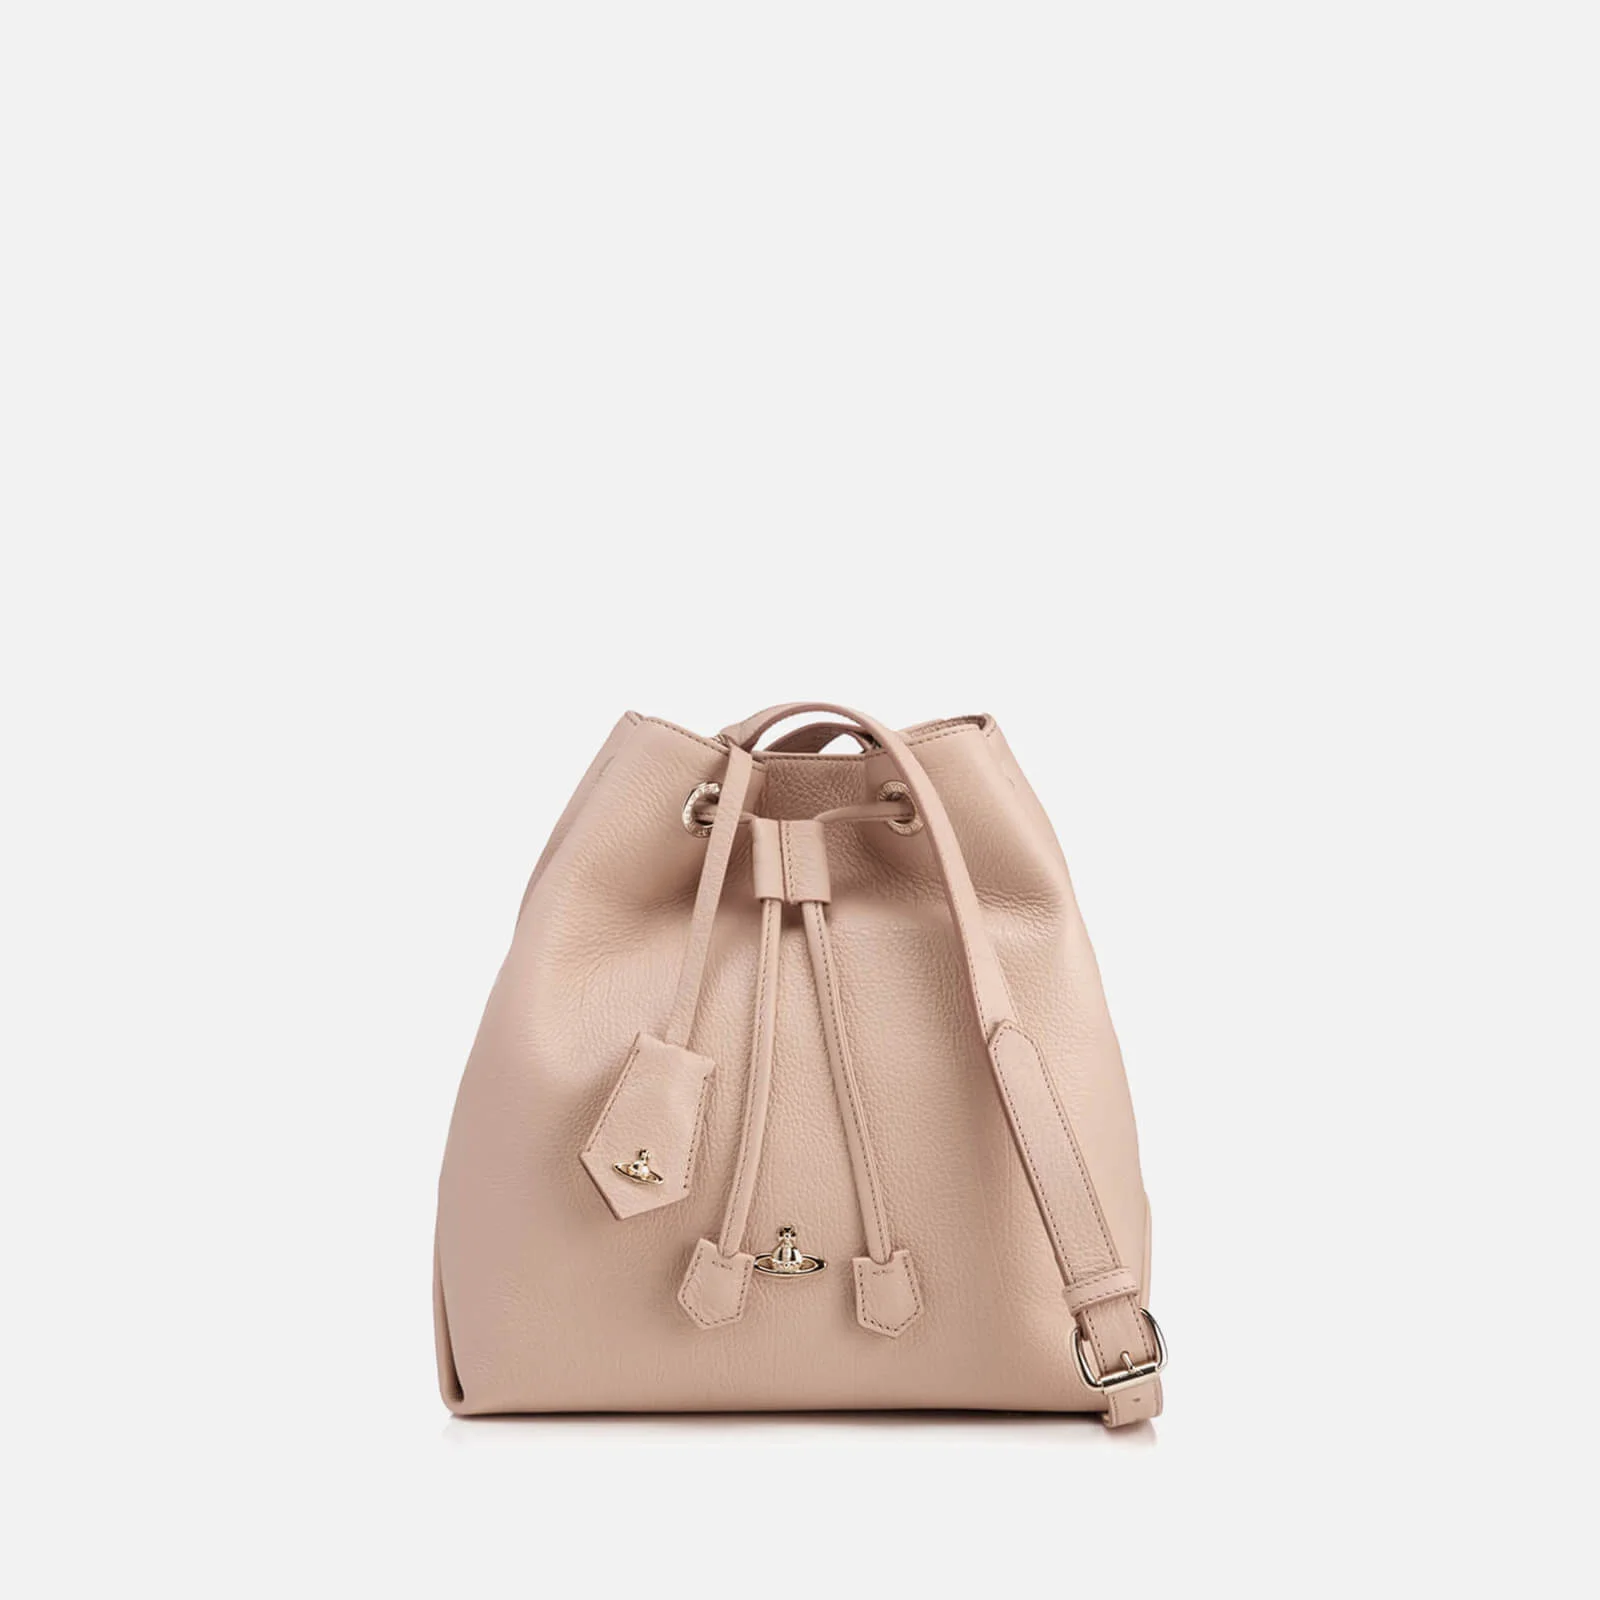 Vivienne Westwood Women's Balmoral Grain Leather Bucket Bag - Pink Image 1